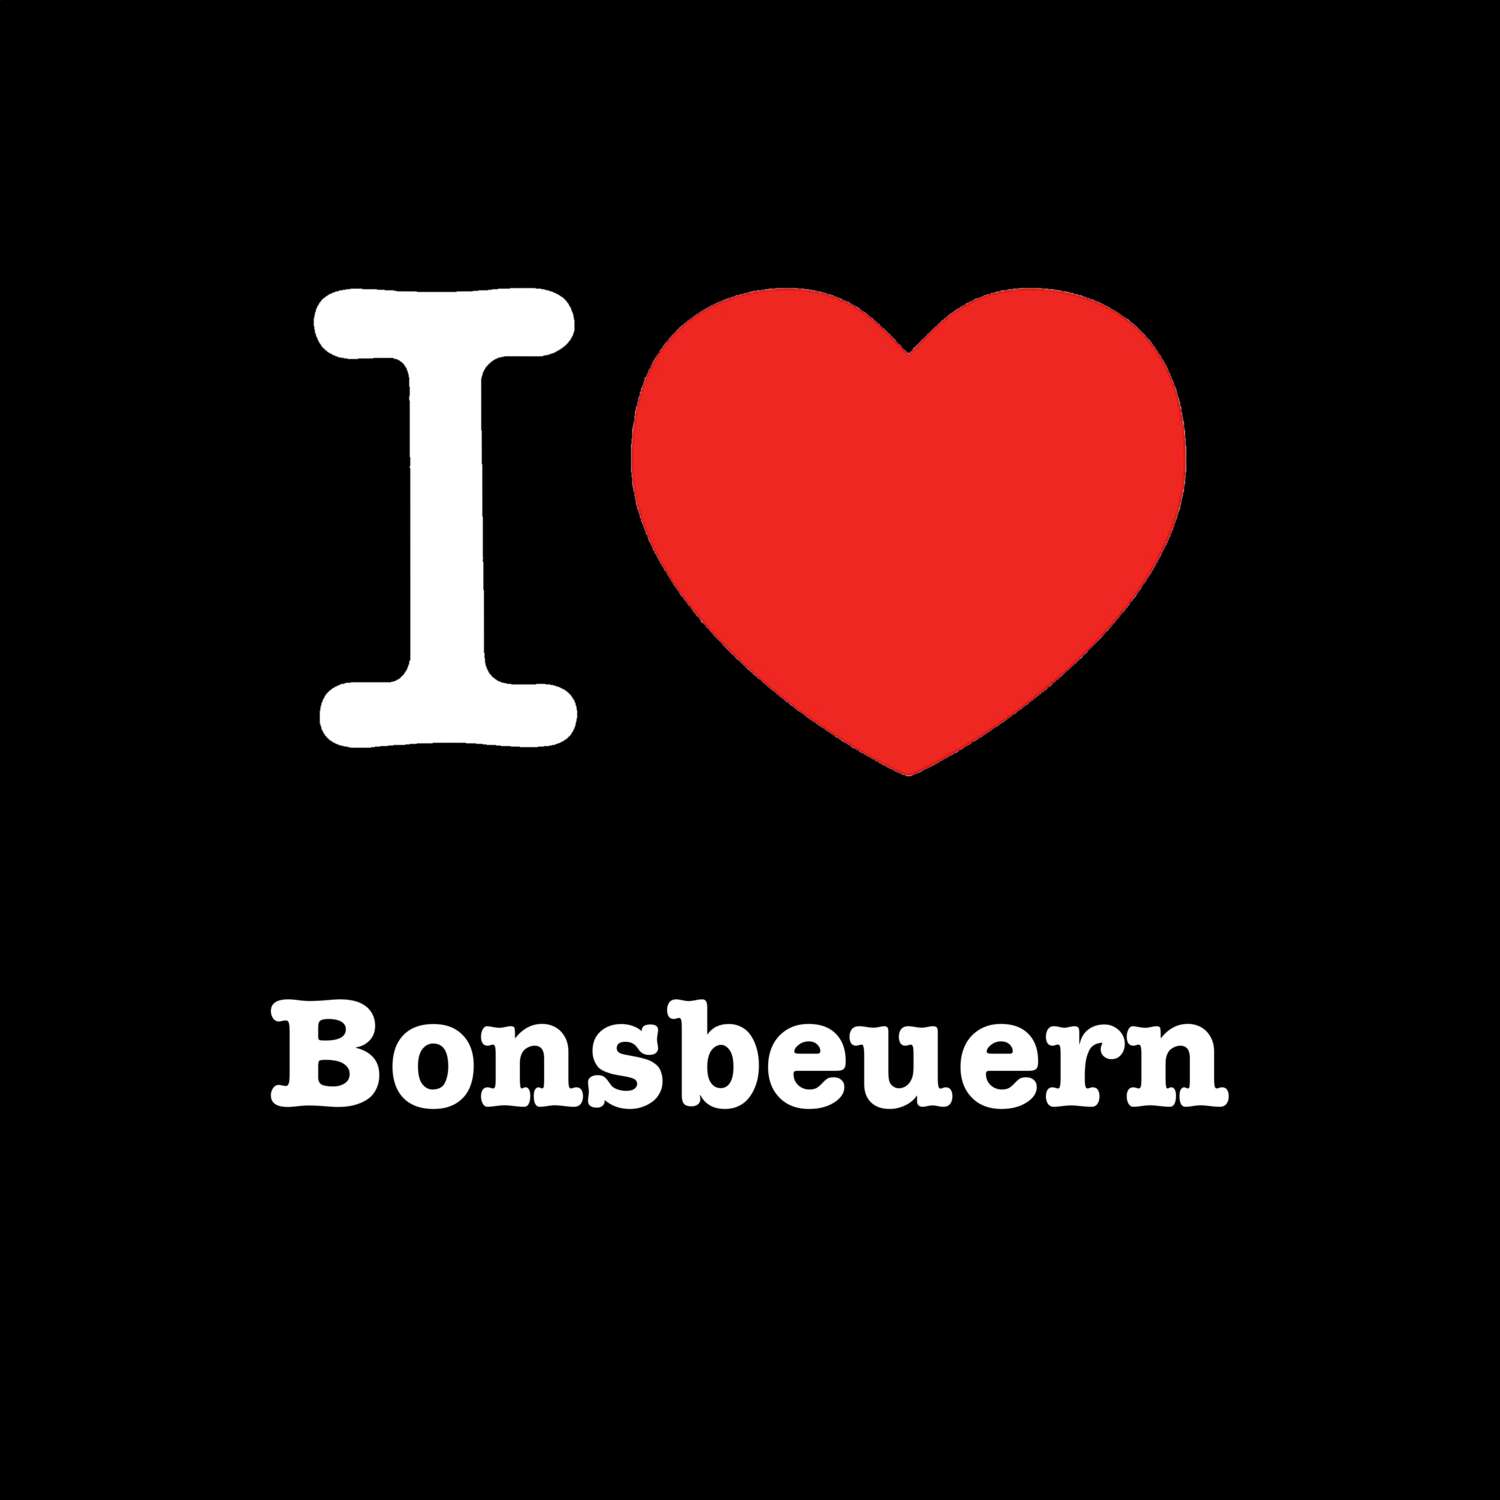 Bonsbeuern T-Shirt »I love«